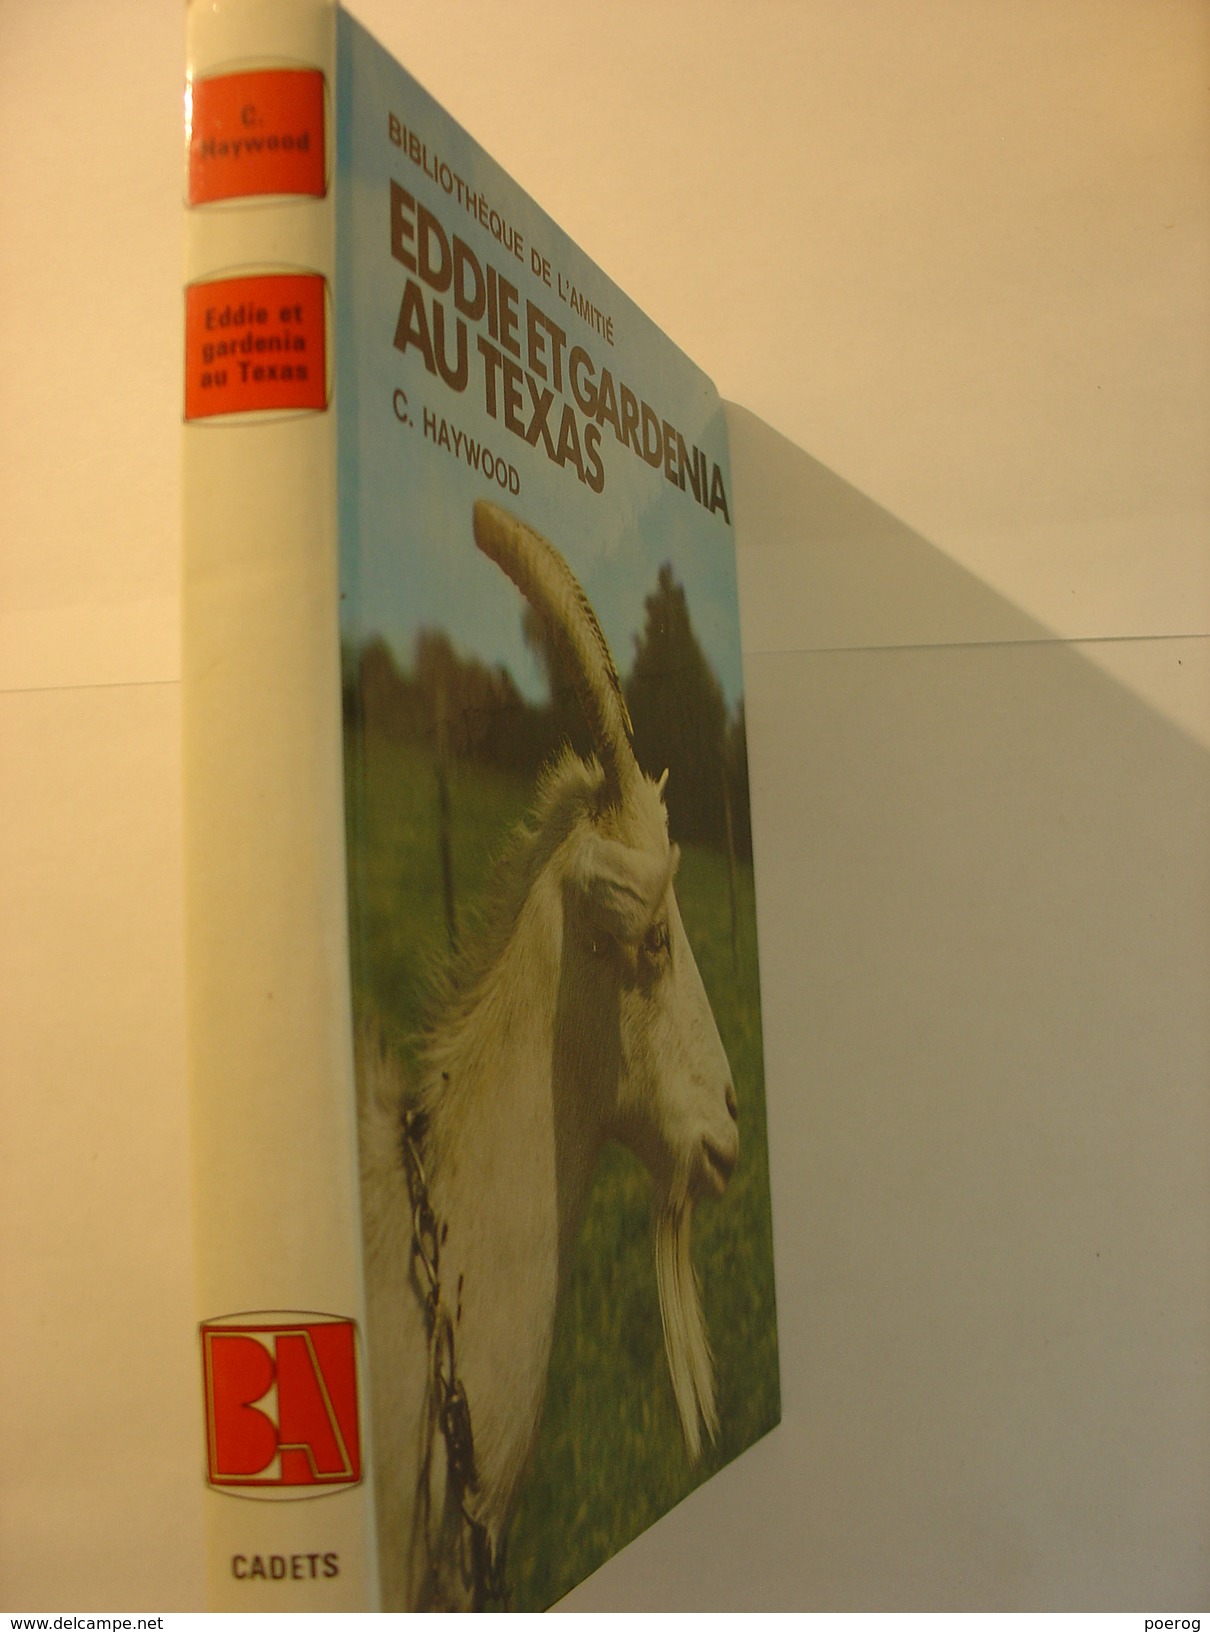 EDDIE ET GARDENIA AU TEXAS - C. HAYWOOD - Bibliothèque De L' Amitié - 1976 - Illustrations HARISPE - Chèvre - Bibliothèque De L'Amitié